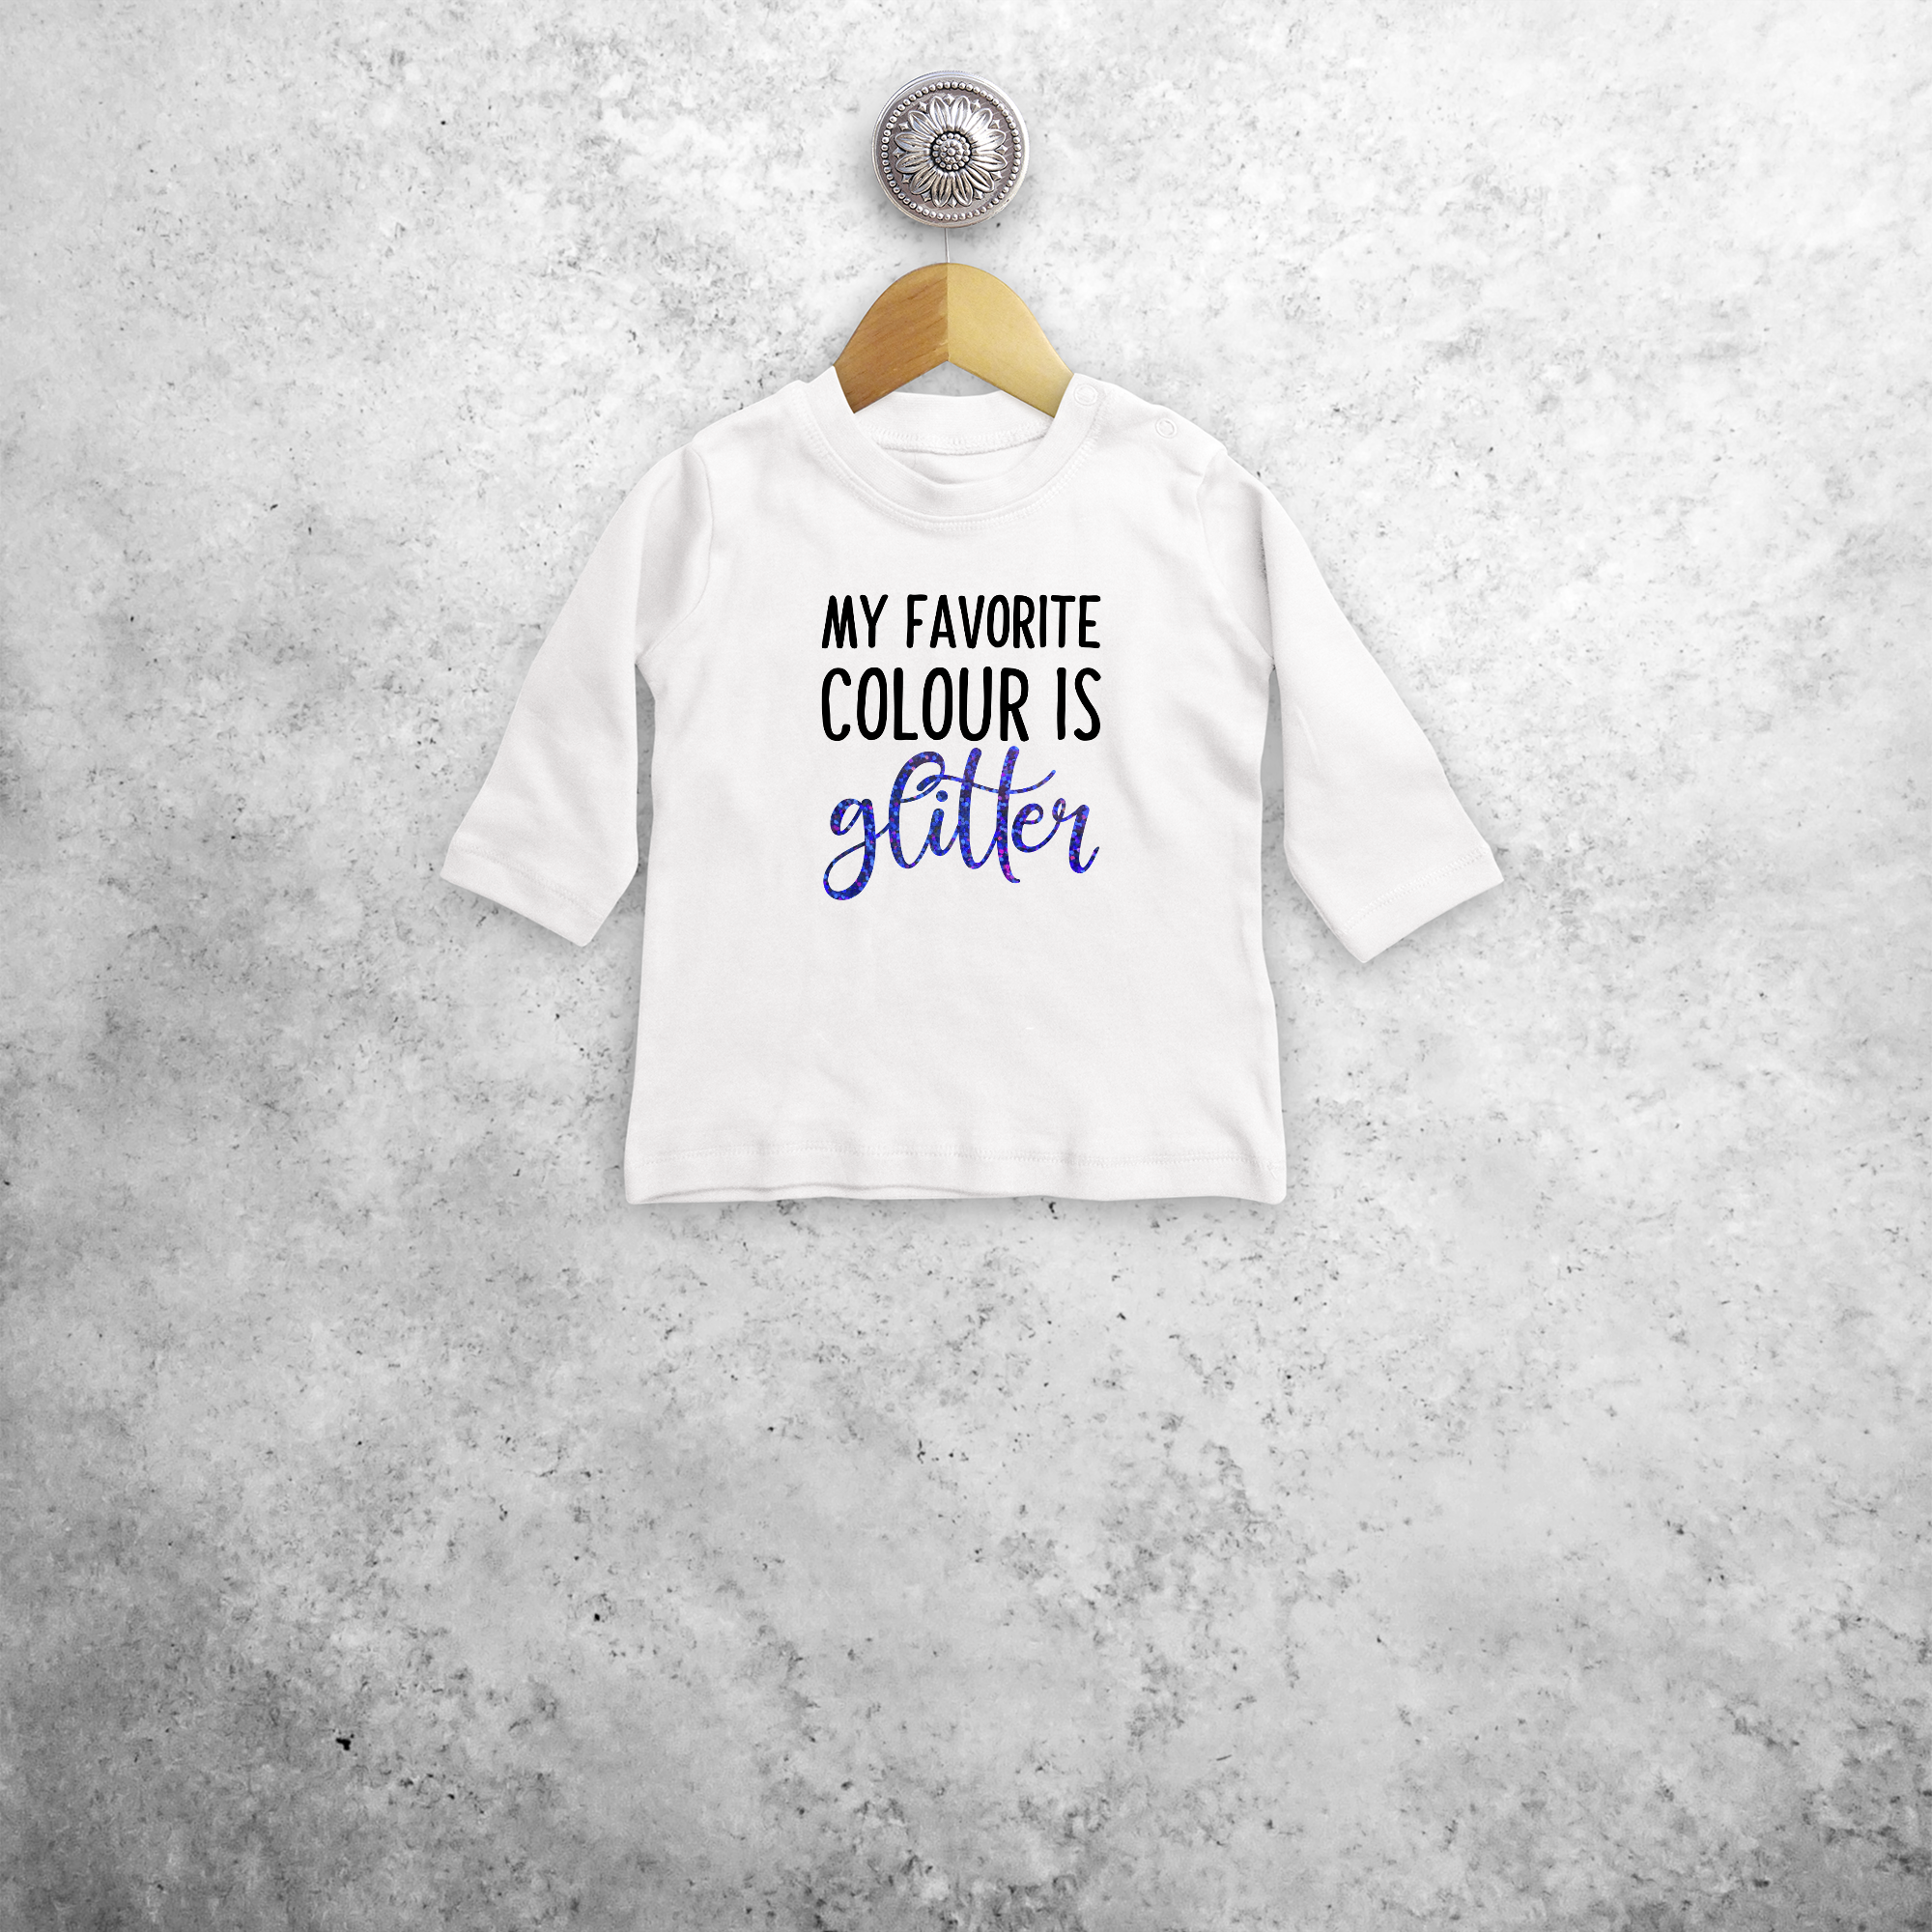 'My favorite colour is glitter' baby shirt met lage mouwen